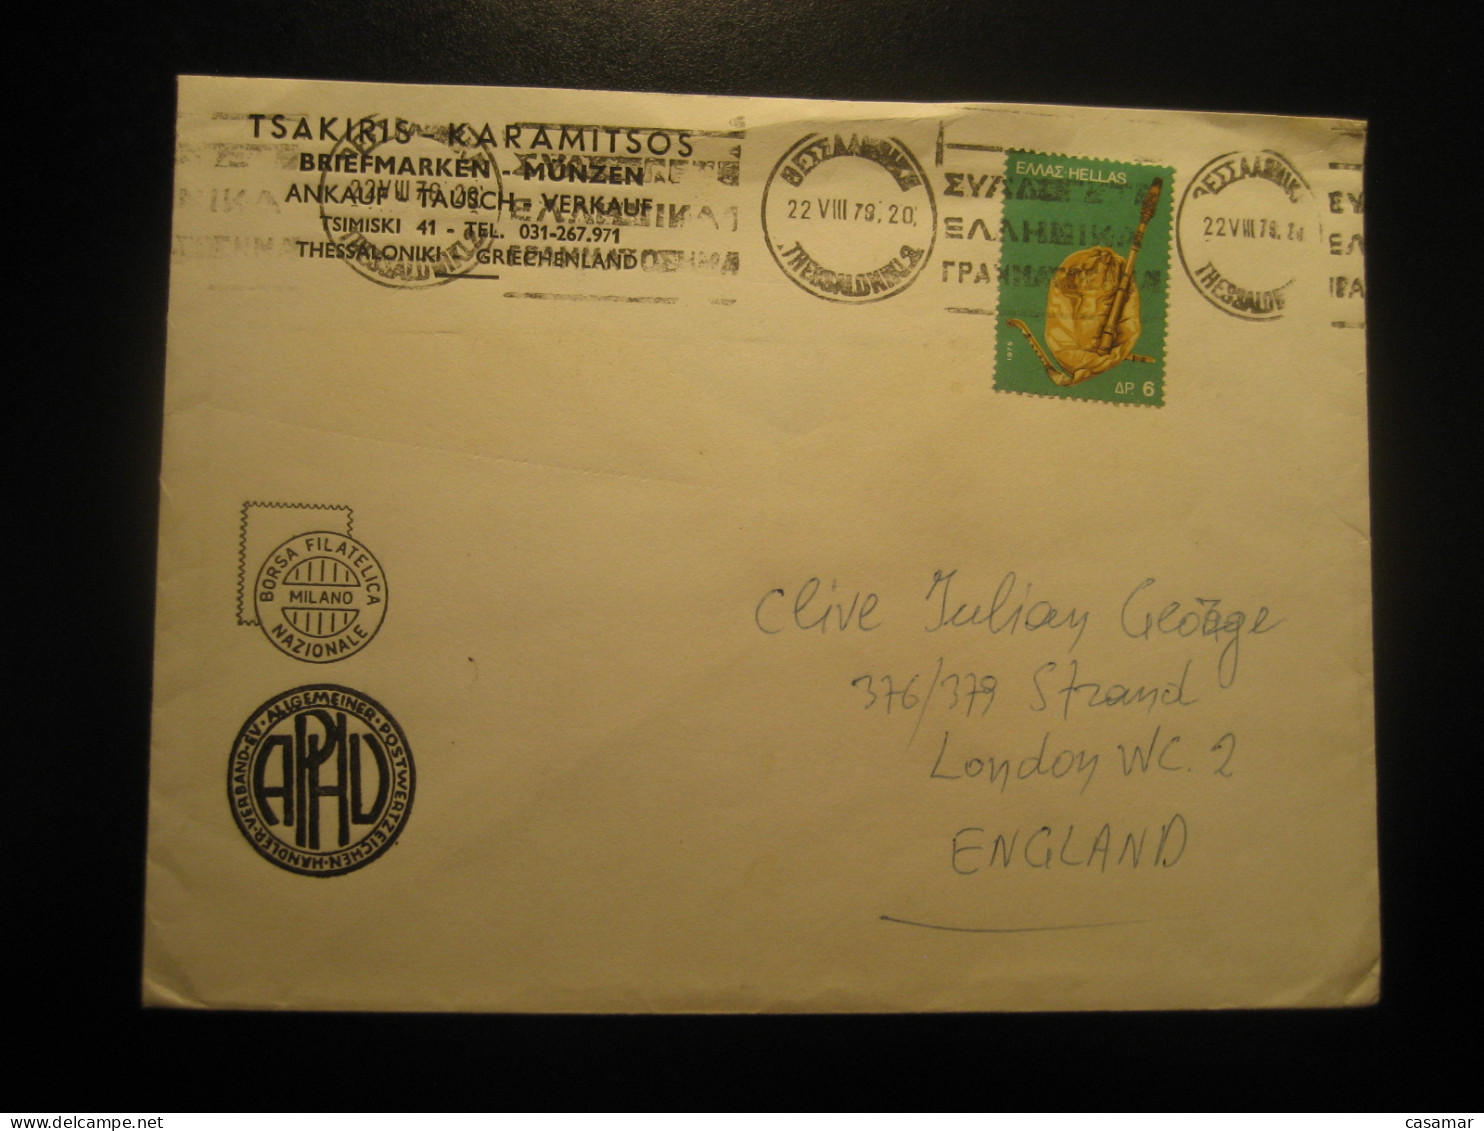 THESSALONIKI 1979 To London England Cancel Cover Stamp GREECE - Storia Postale